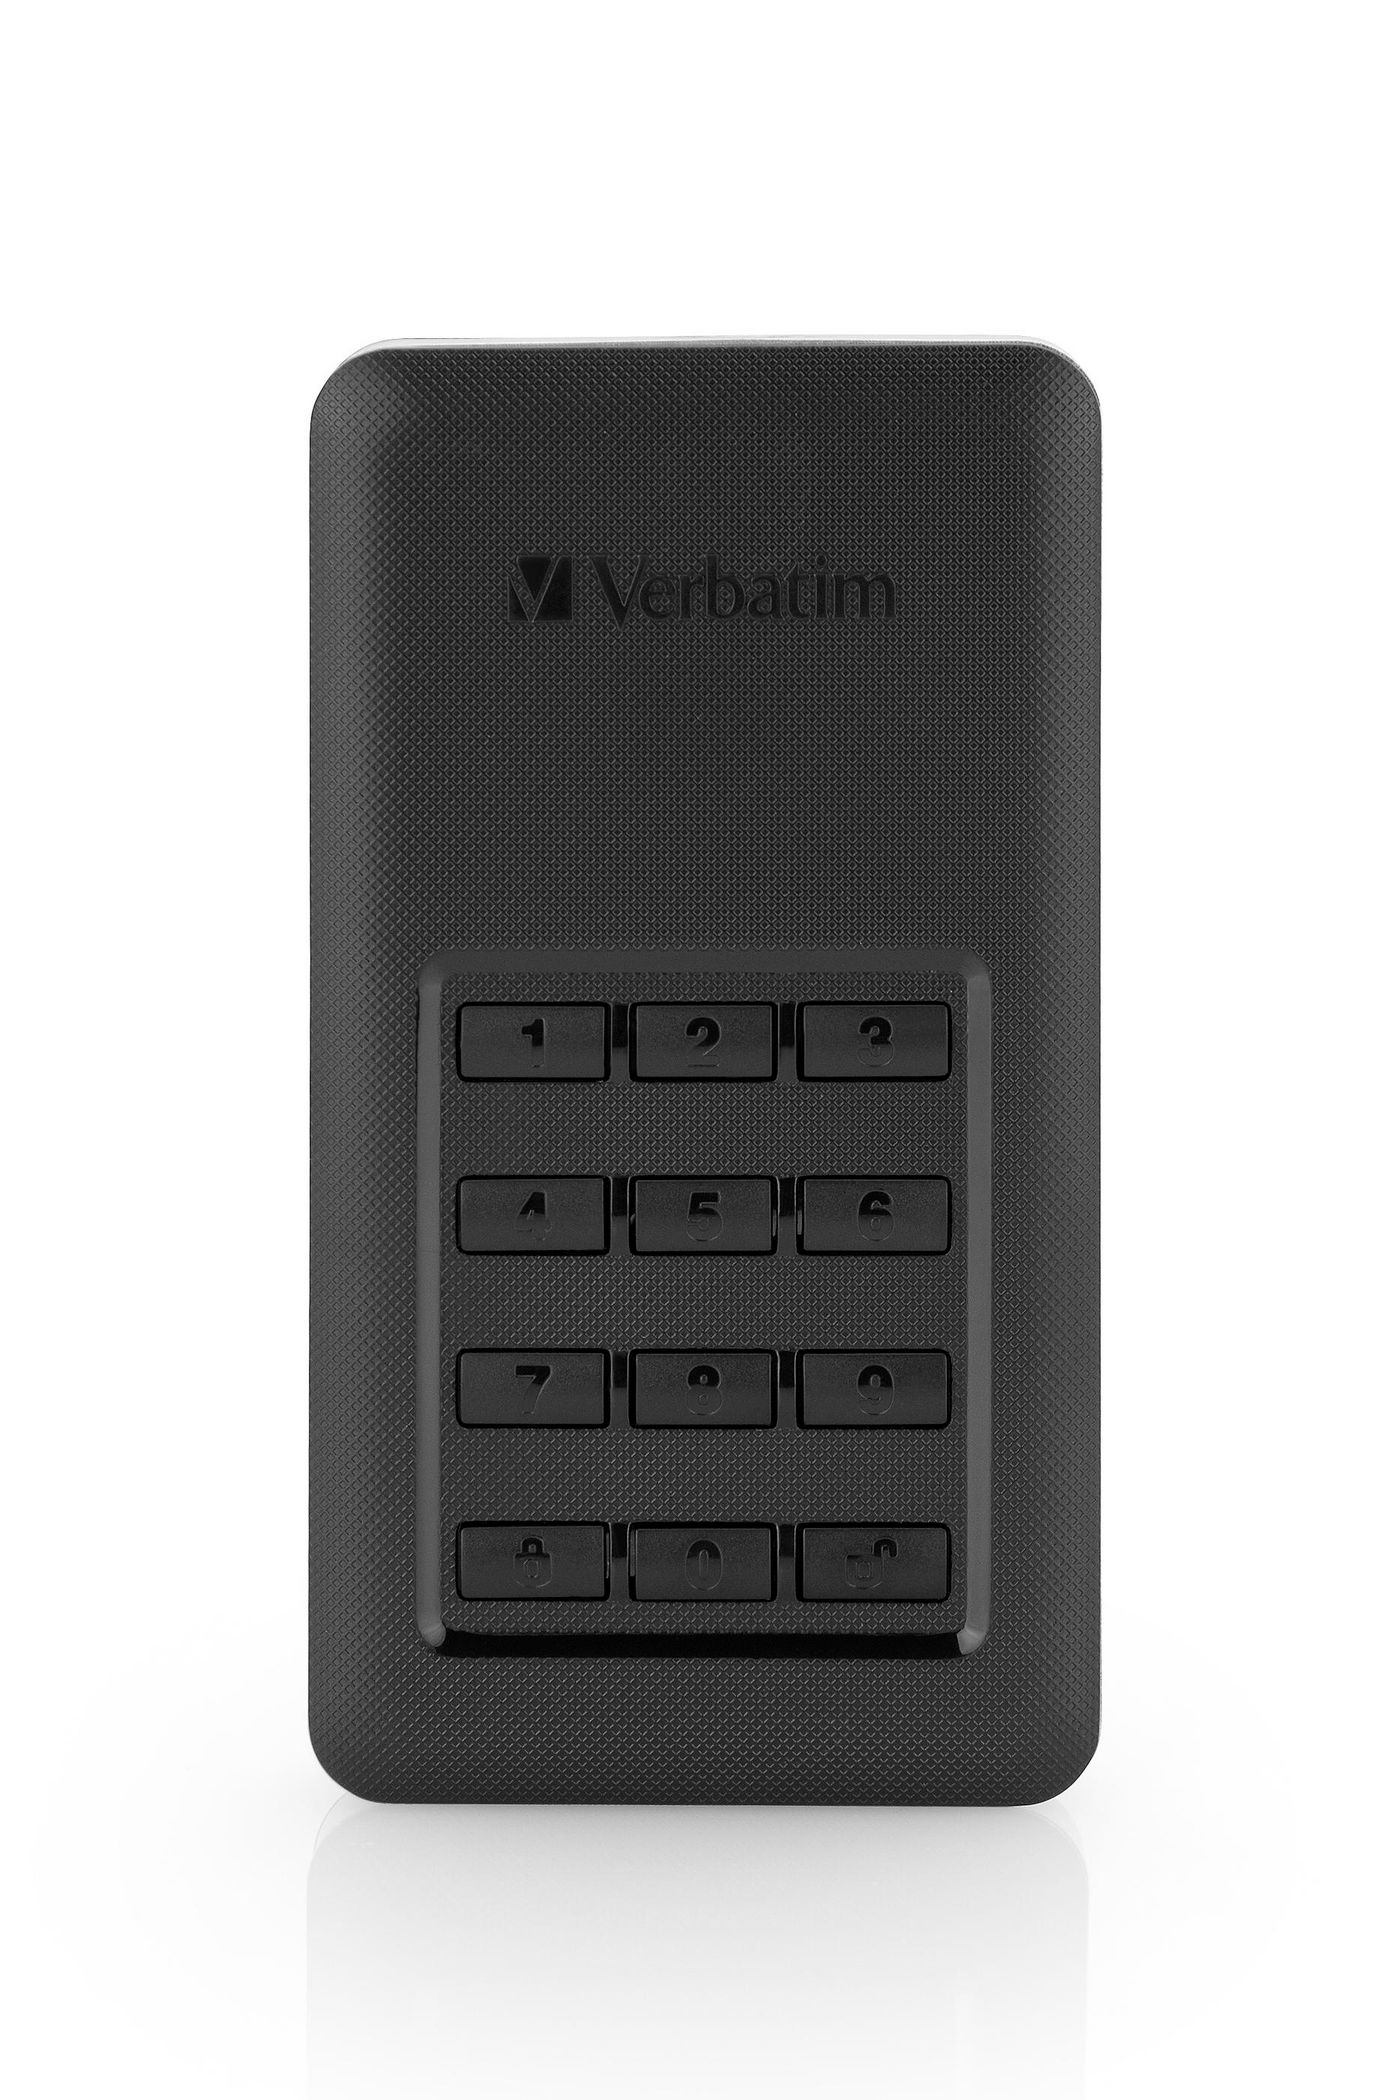 Verbatim 53402 SSD 256 GB, External Drive 